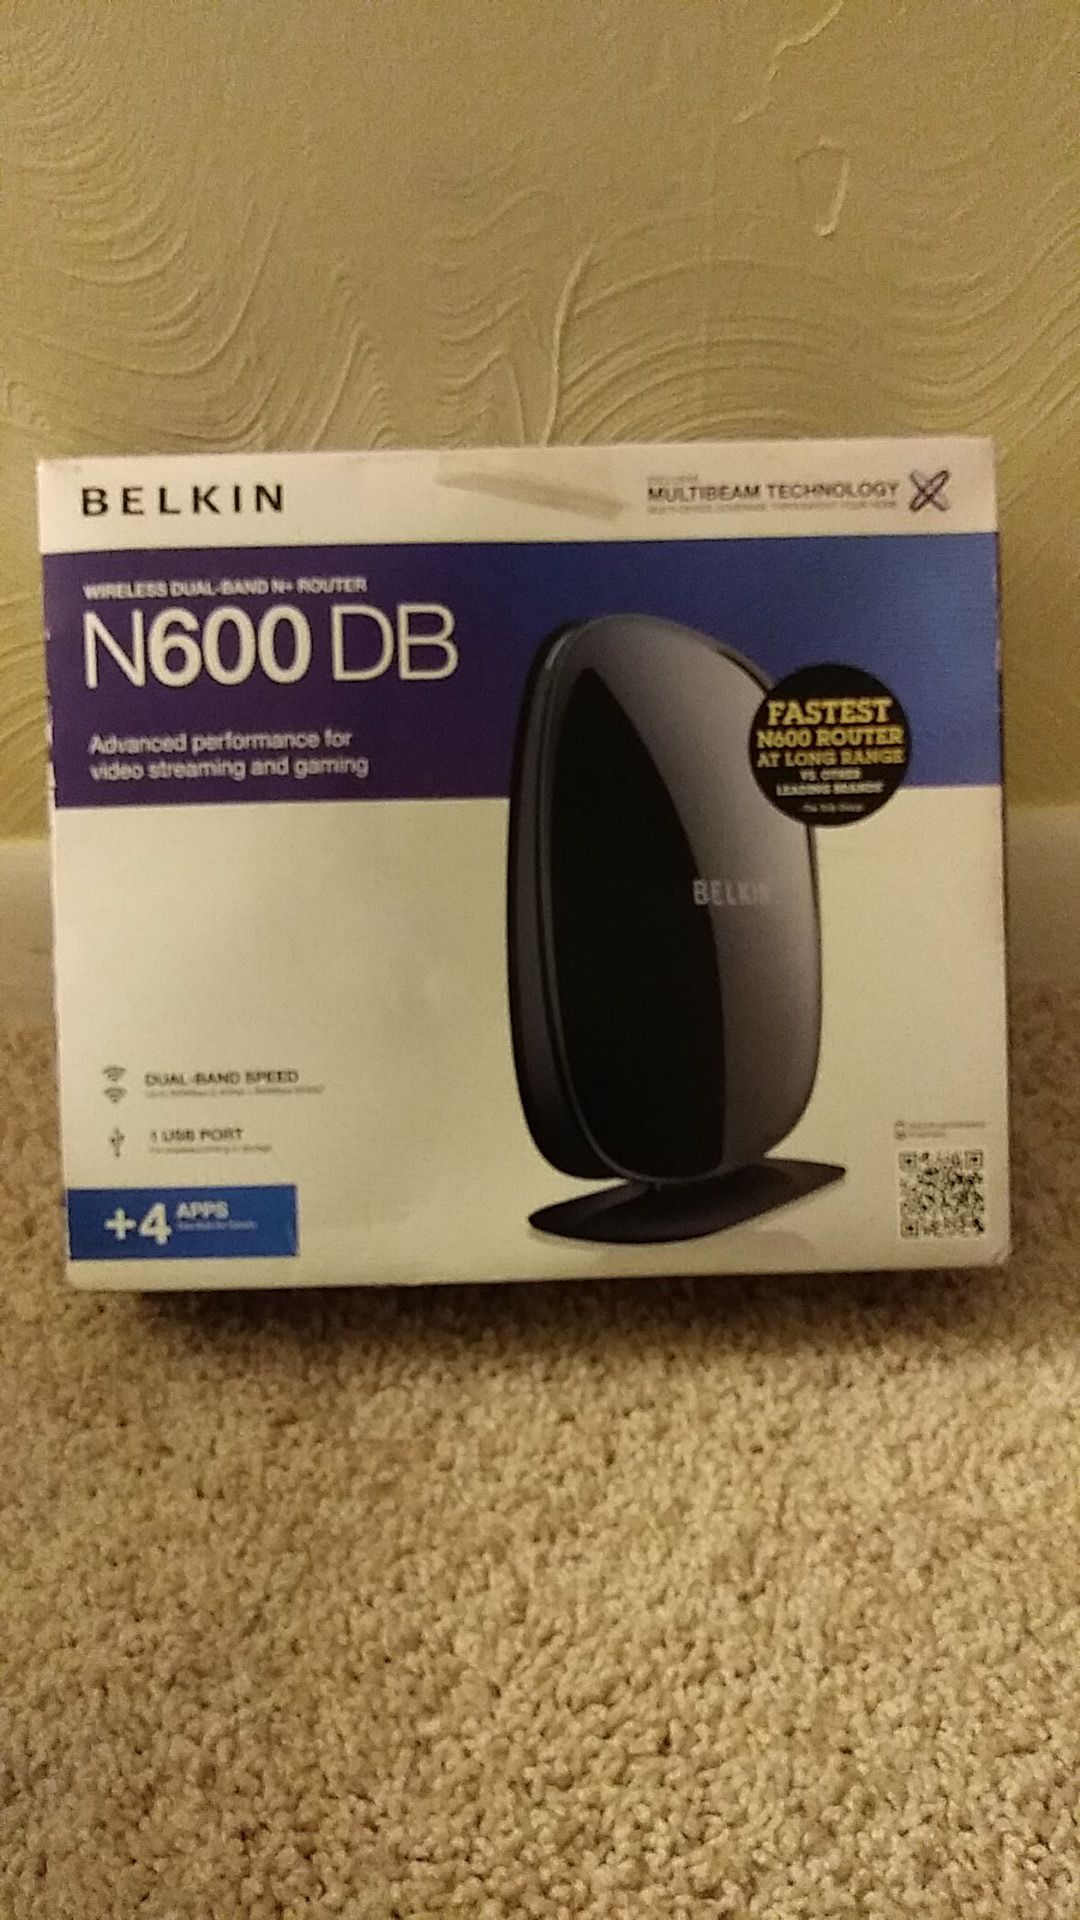 Belkin N600 DB wireless dual band router